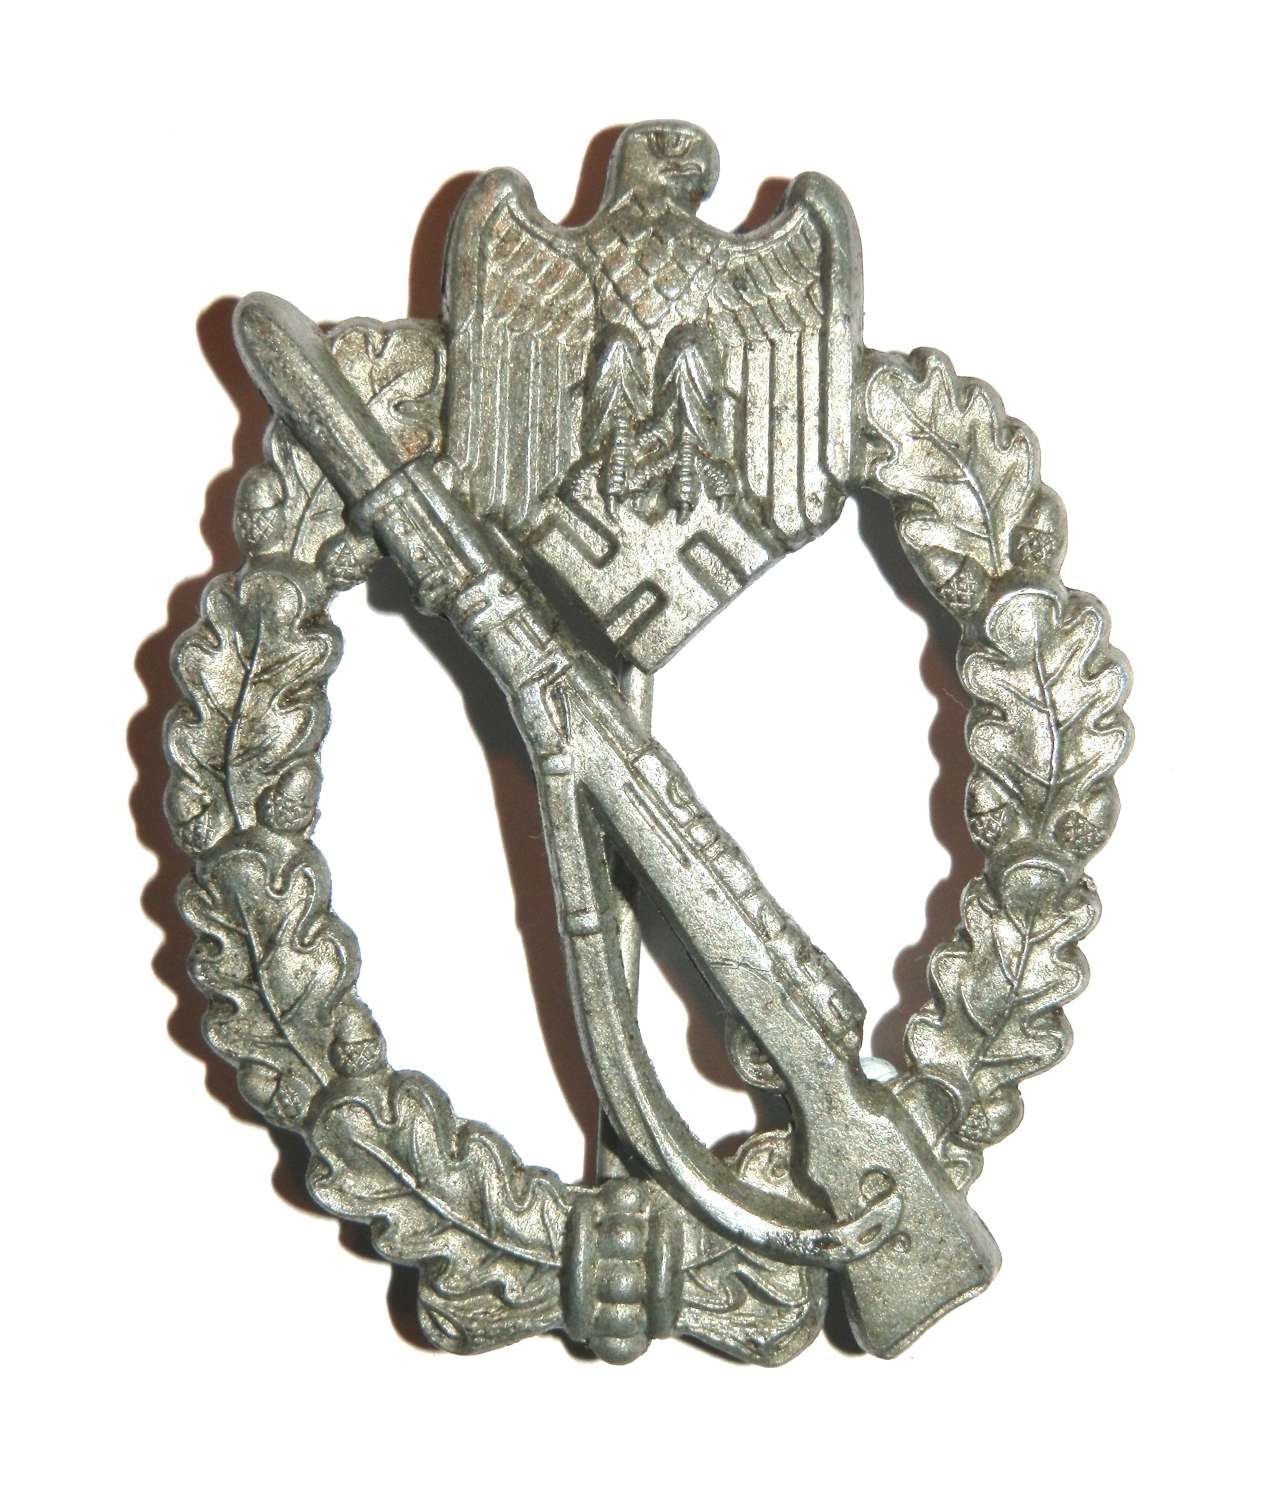 German Infantry Assault Badge. By ‘F.W. Assmann.’, N0’4’.